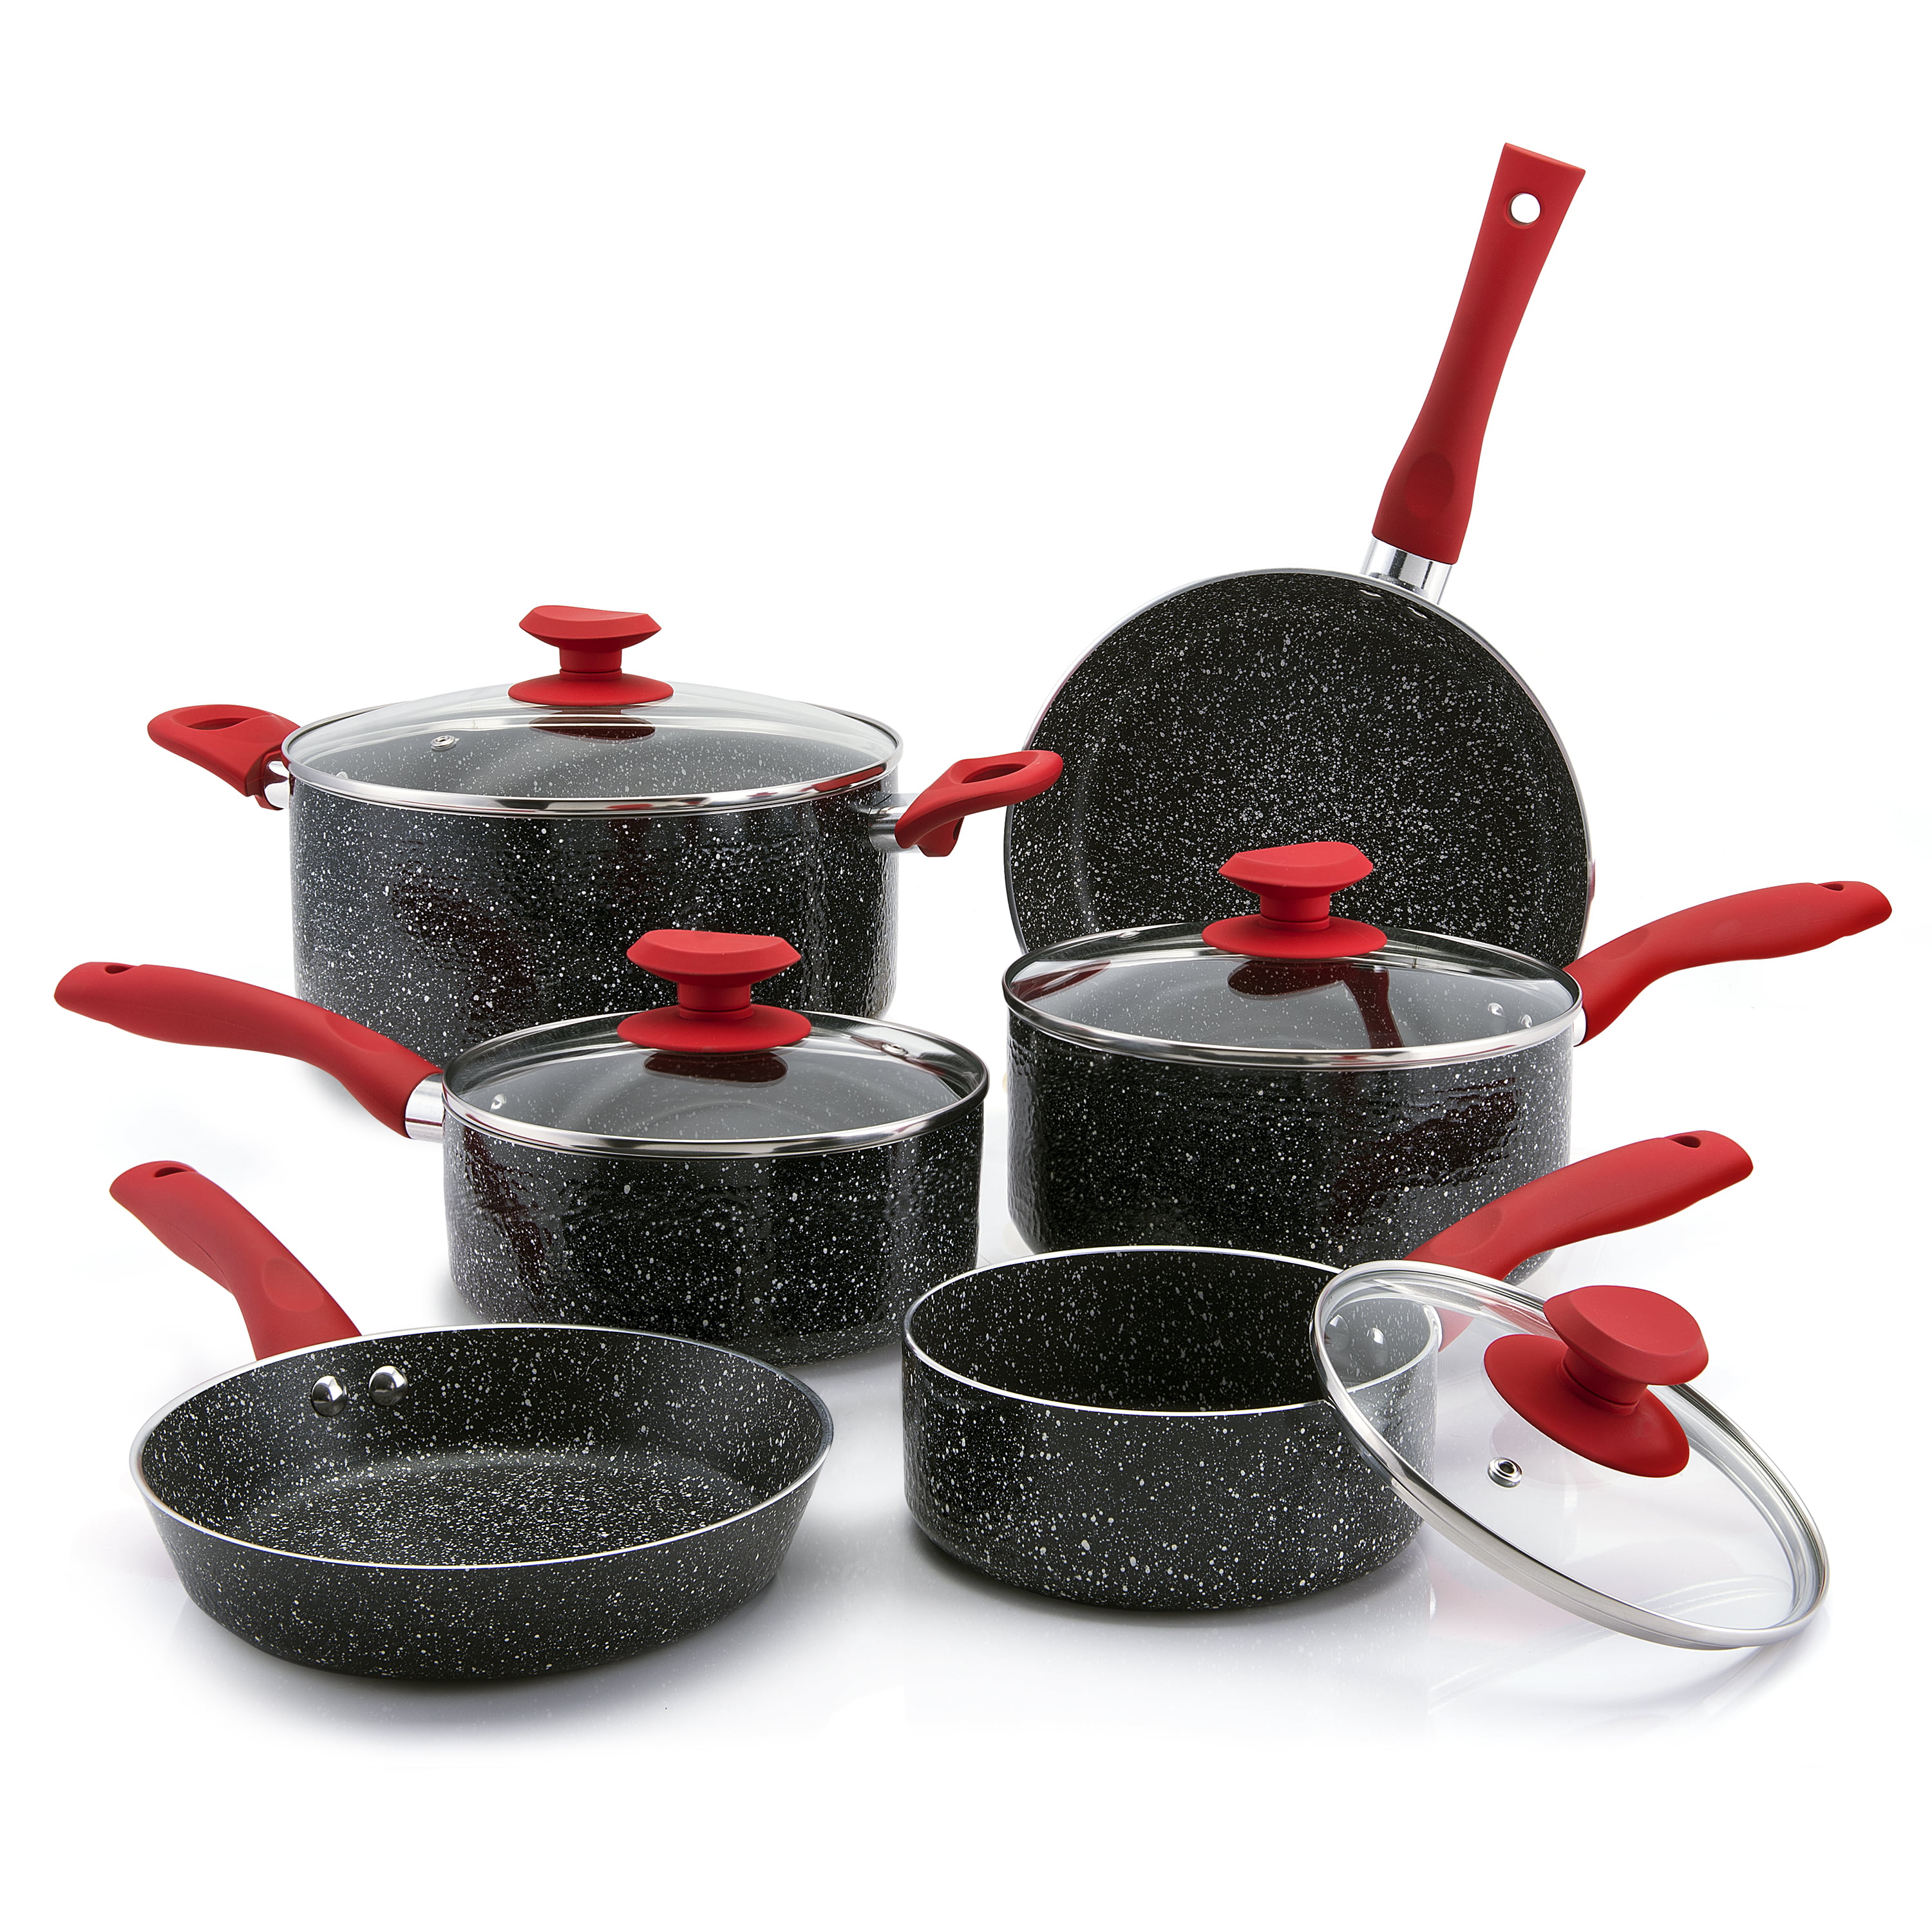 Professional 10-piece Cookware Set - Black - 3828530